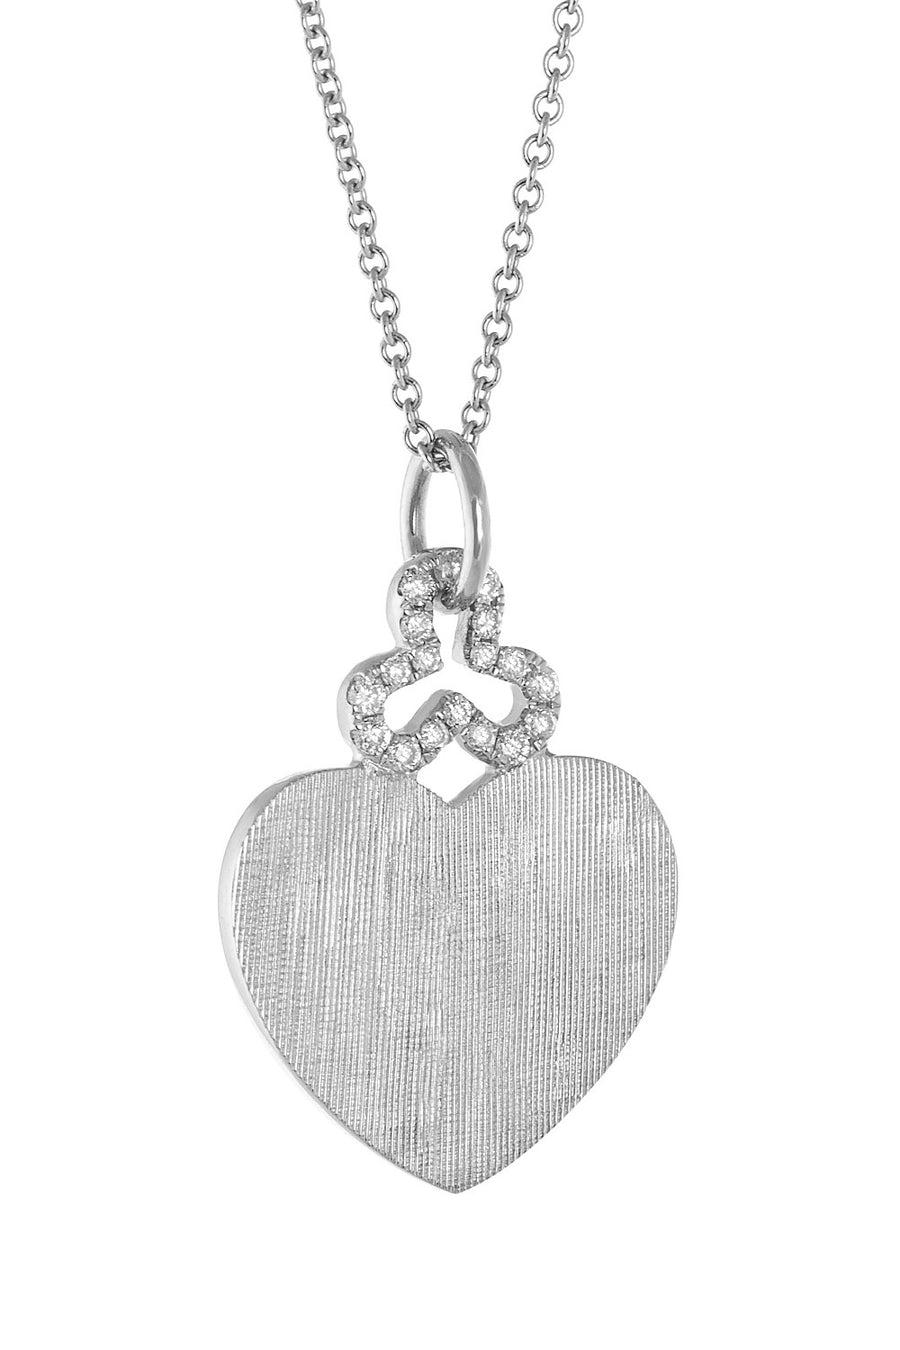 Diamond 'Heart' Charm in 18k Gold | Florentine